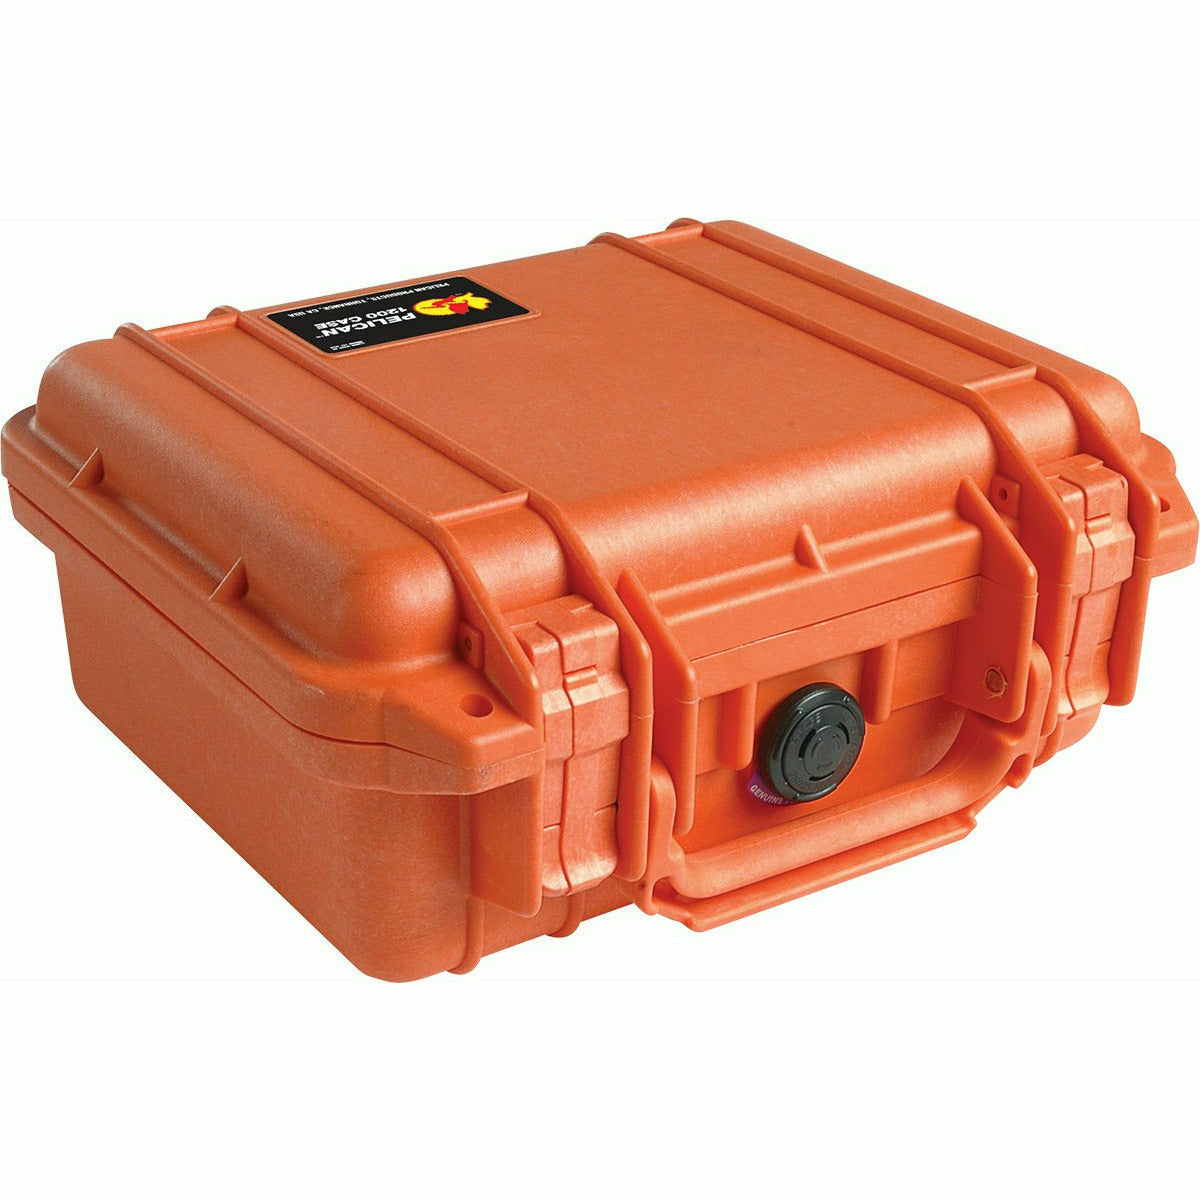 PELICAN Case 1200 Orange - Dragon Image